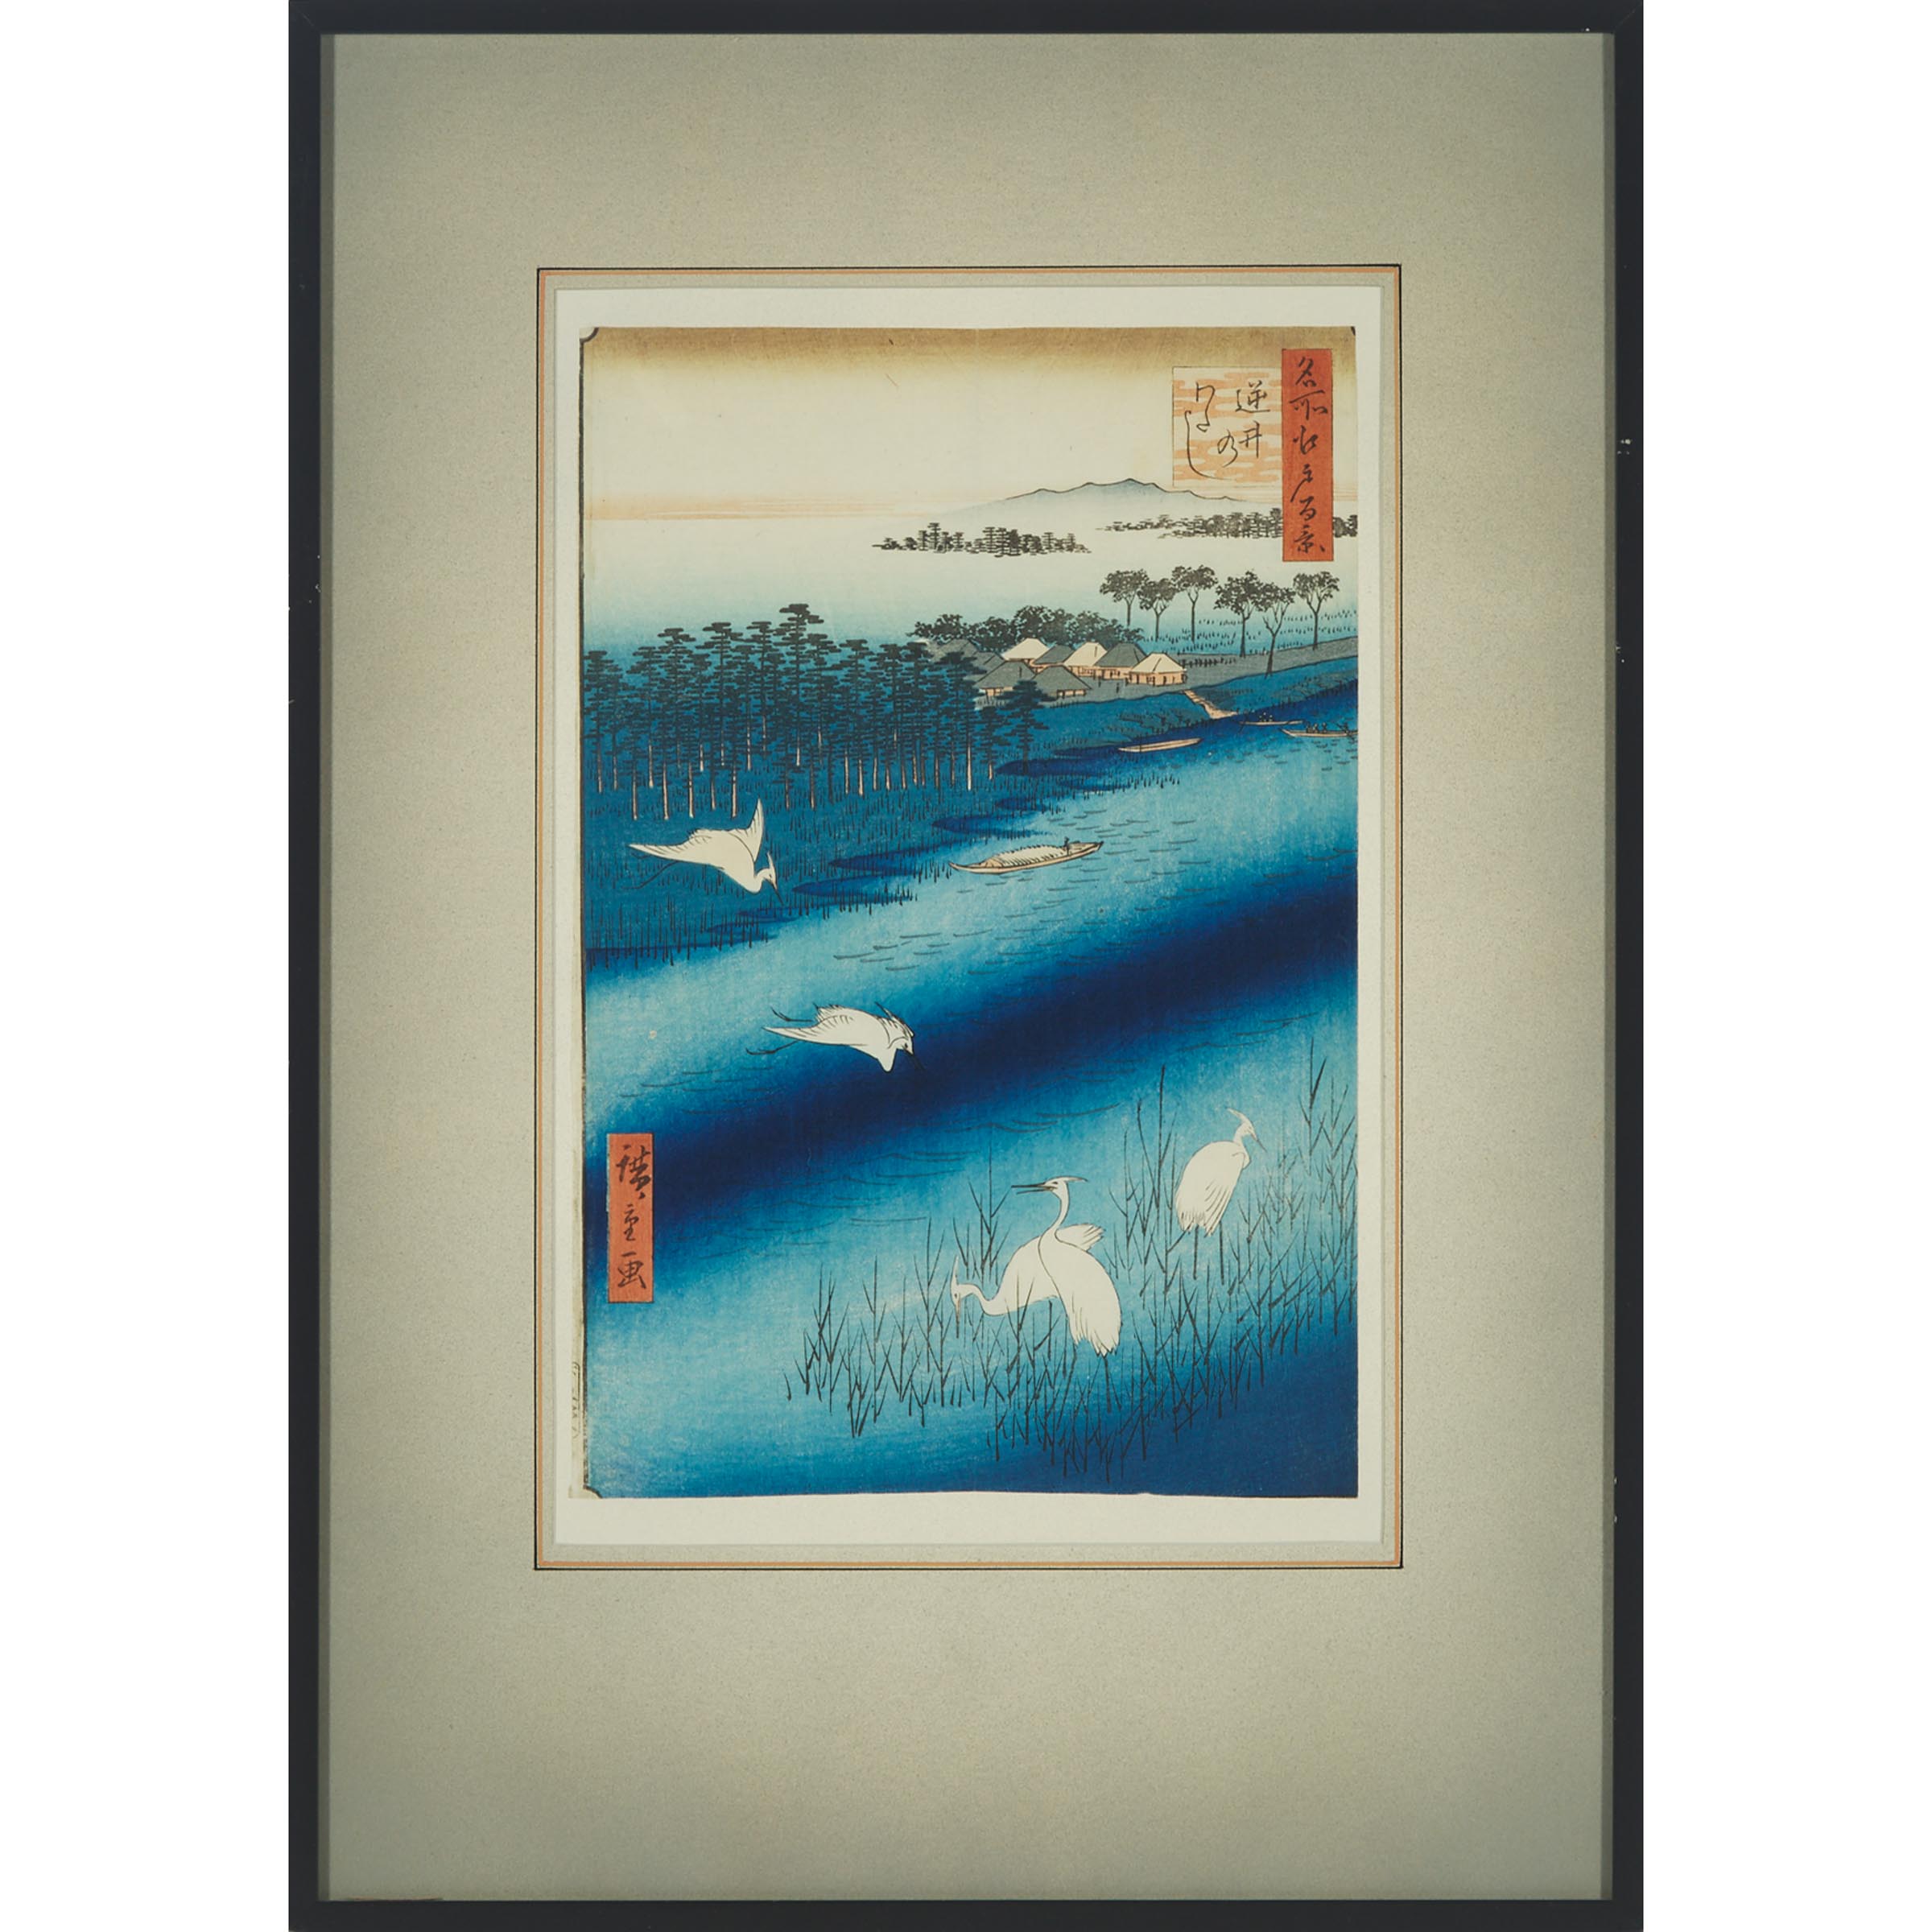 Utagawa Hiroshige (1797-1858), The Ferry Crossing at Sakasai (Sakasai no watashi), 1857